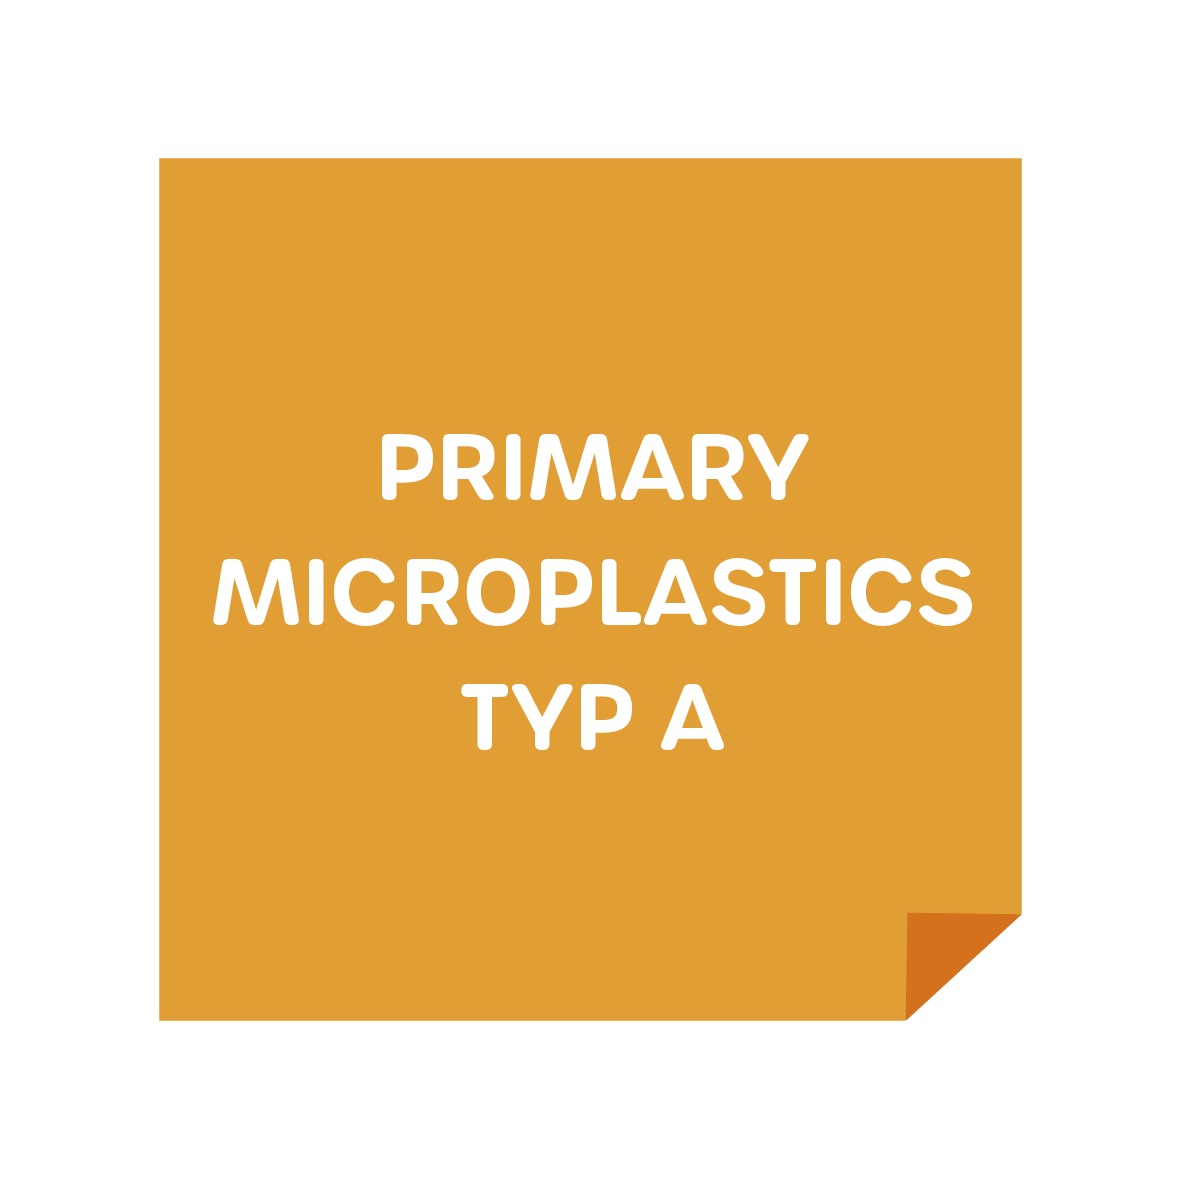 Primary Microplastics Typ A